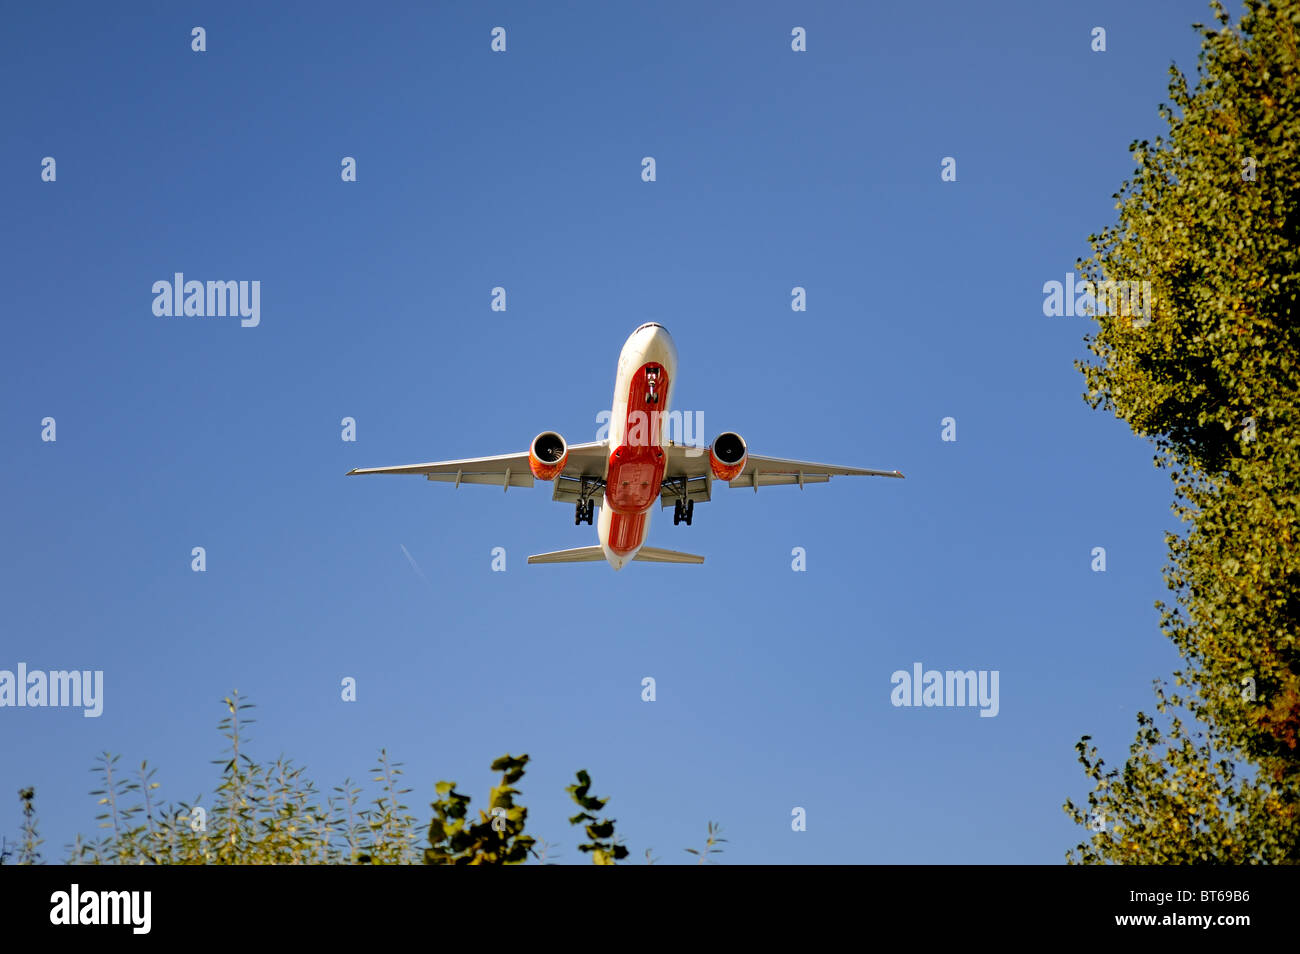 Passenger jet coming into land Stock Photo